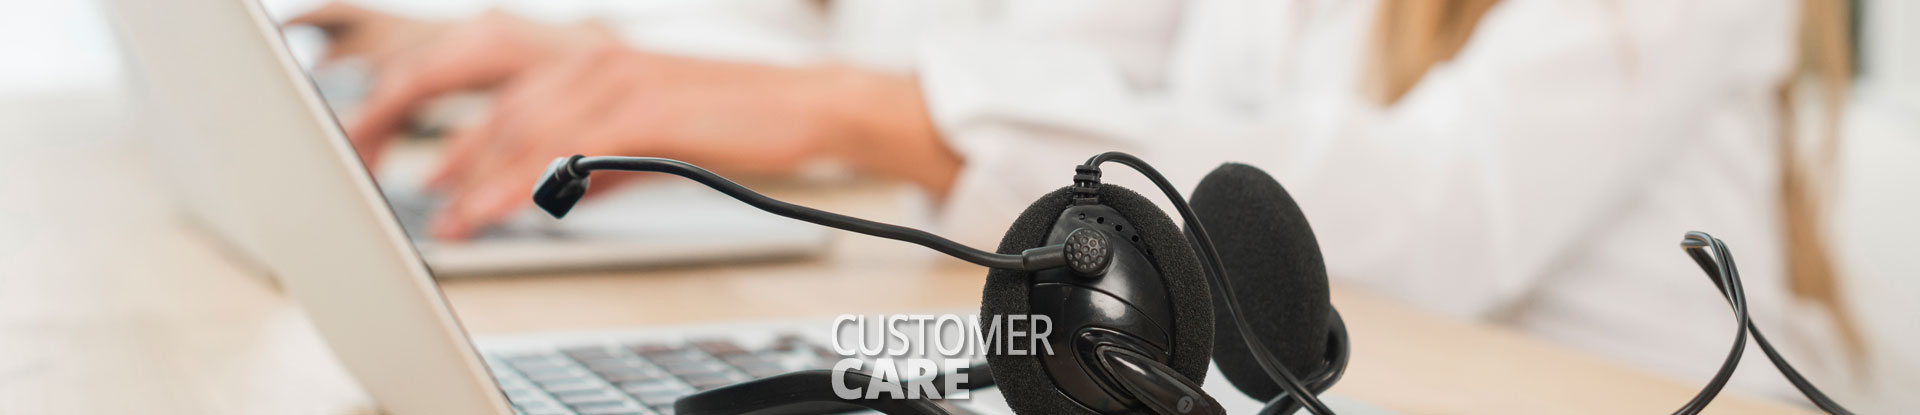 Customer Care | Captain Polyplast Ltd.